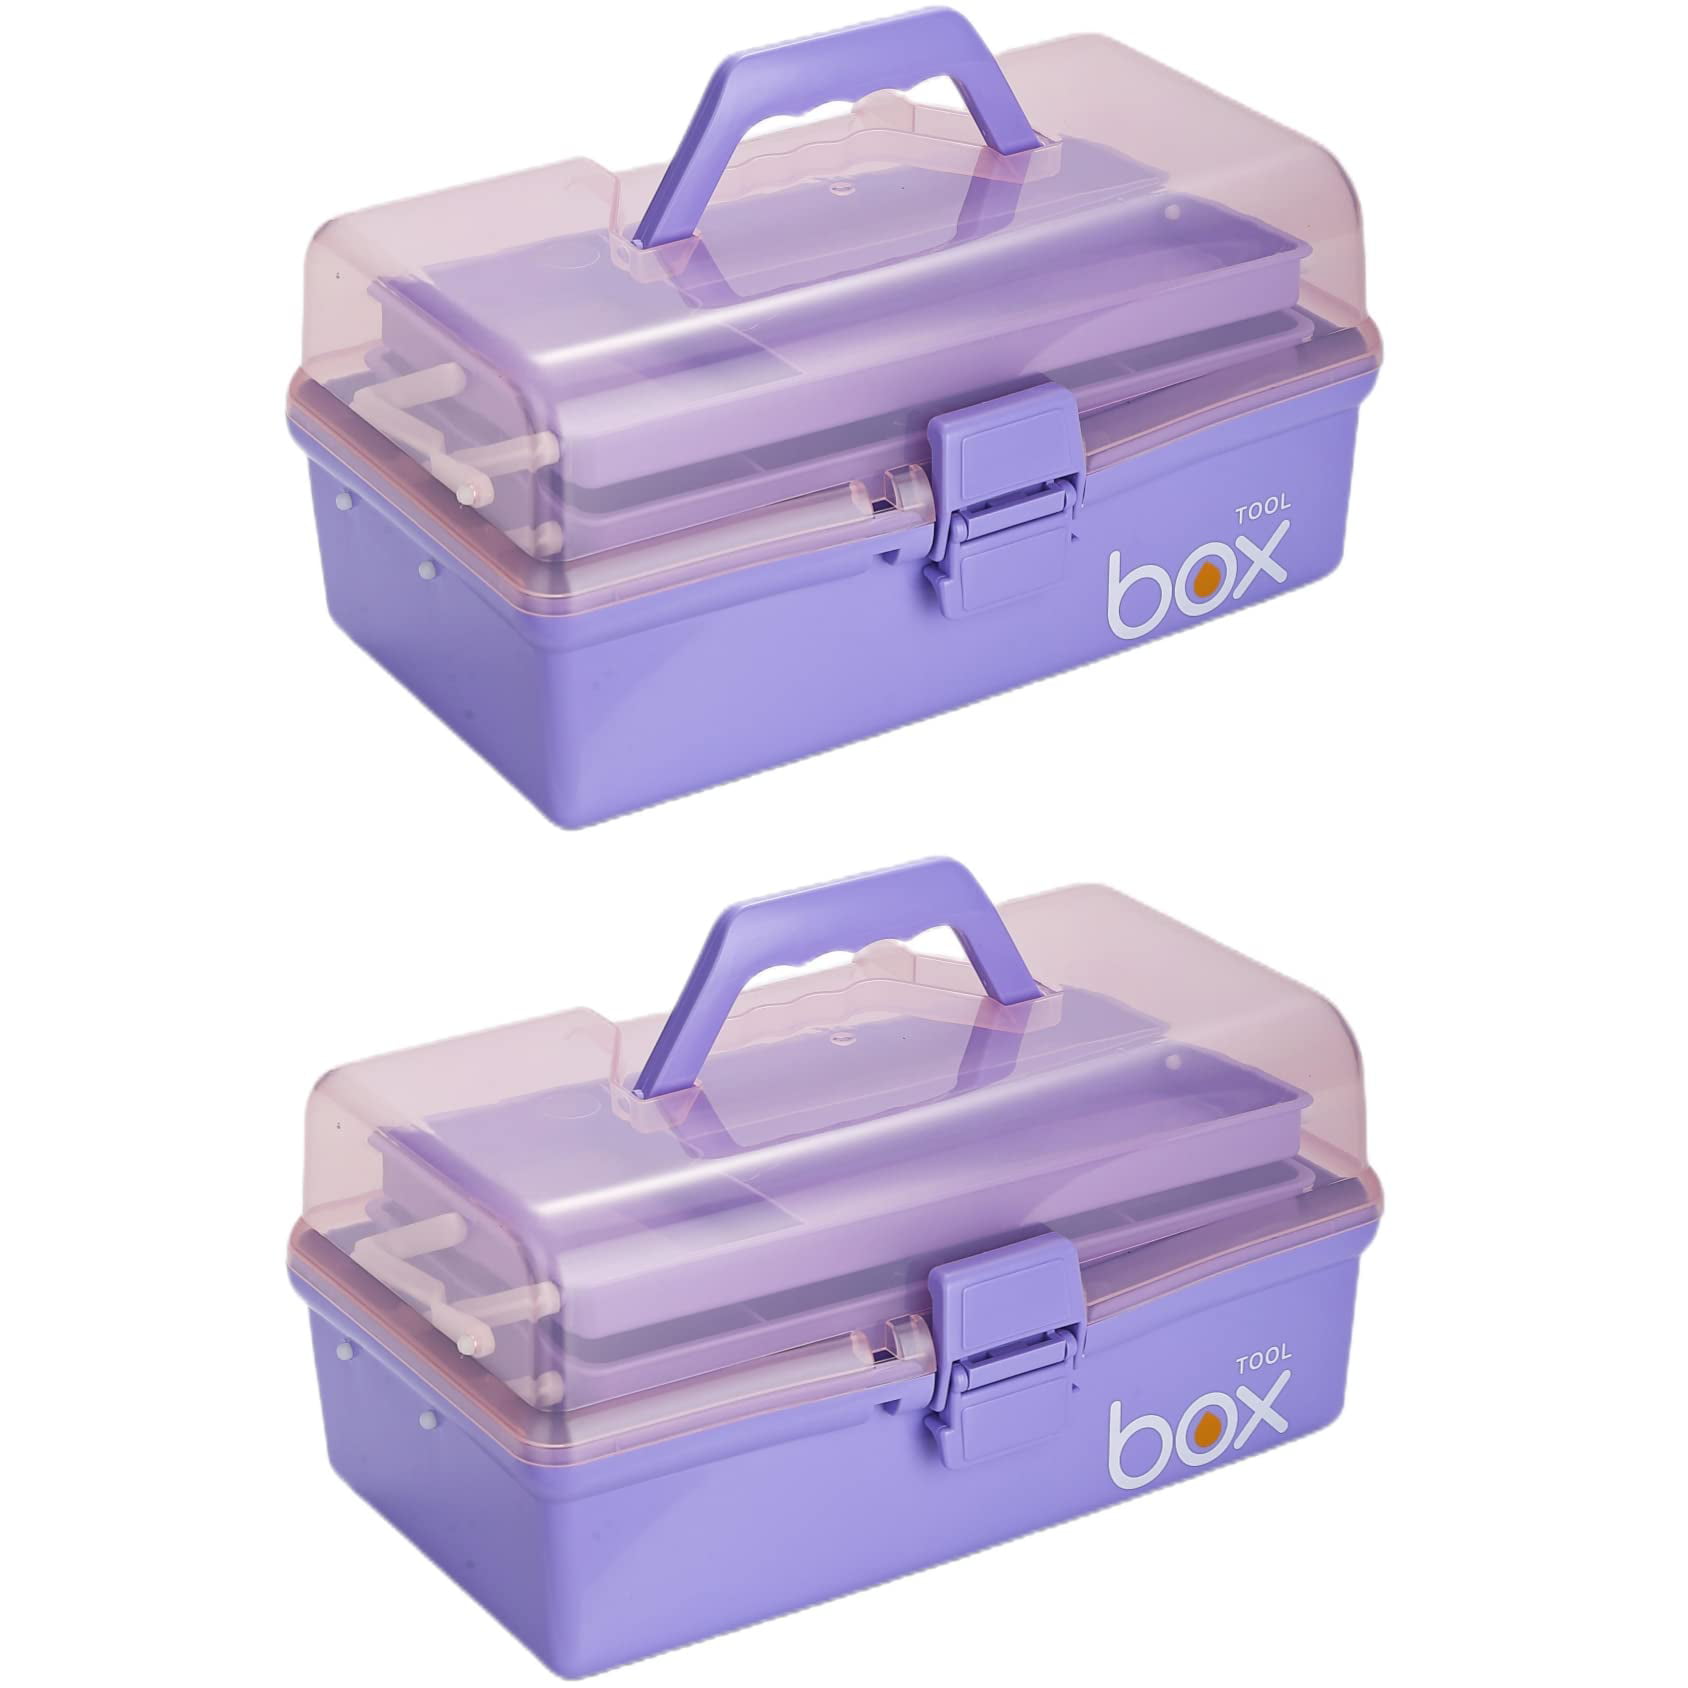 3-Layer Craft Storage Box, Purple